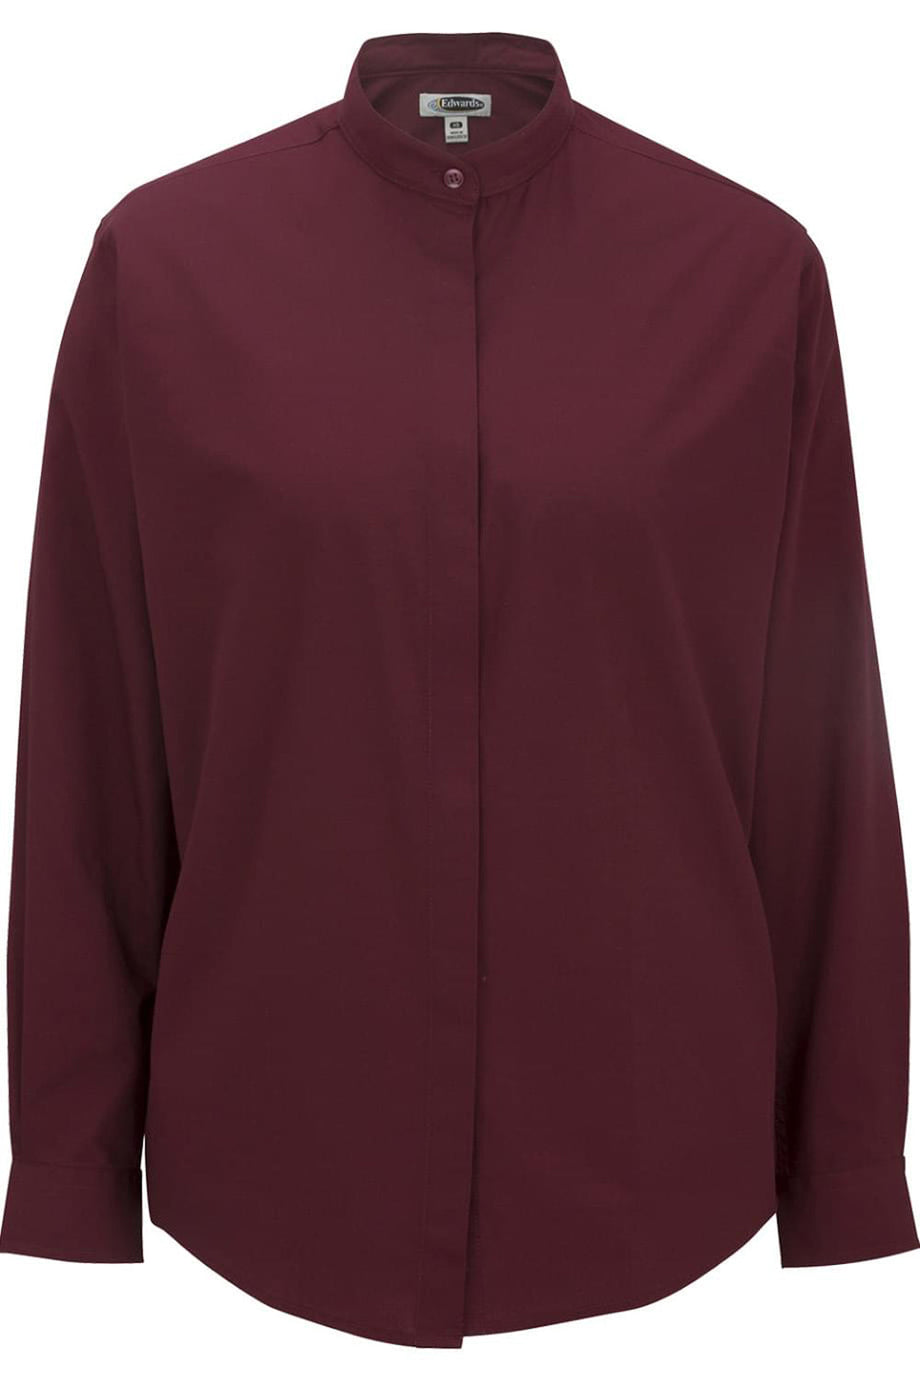 Edwards XXS Ladies' Banded Collar Broadcloth Shirt - Burgundy